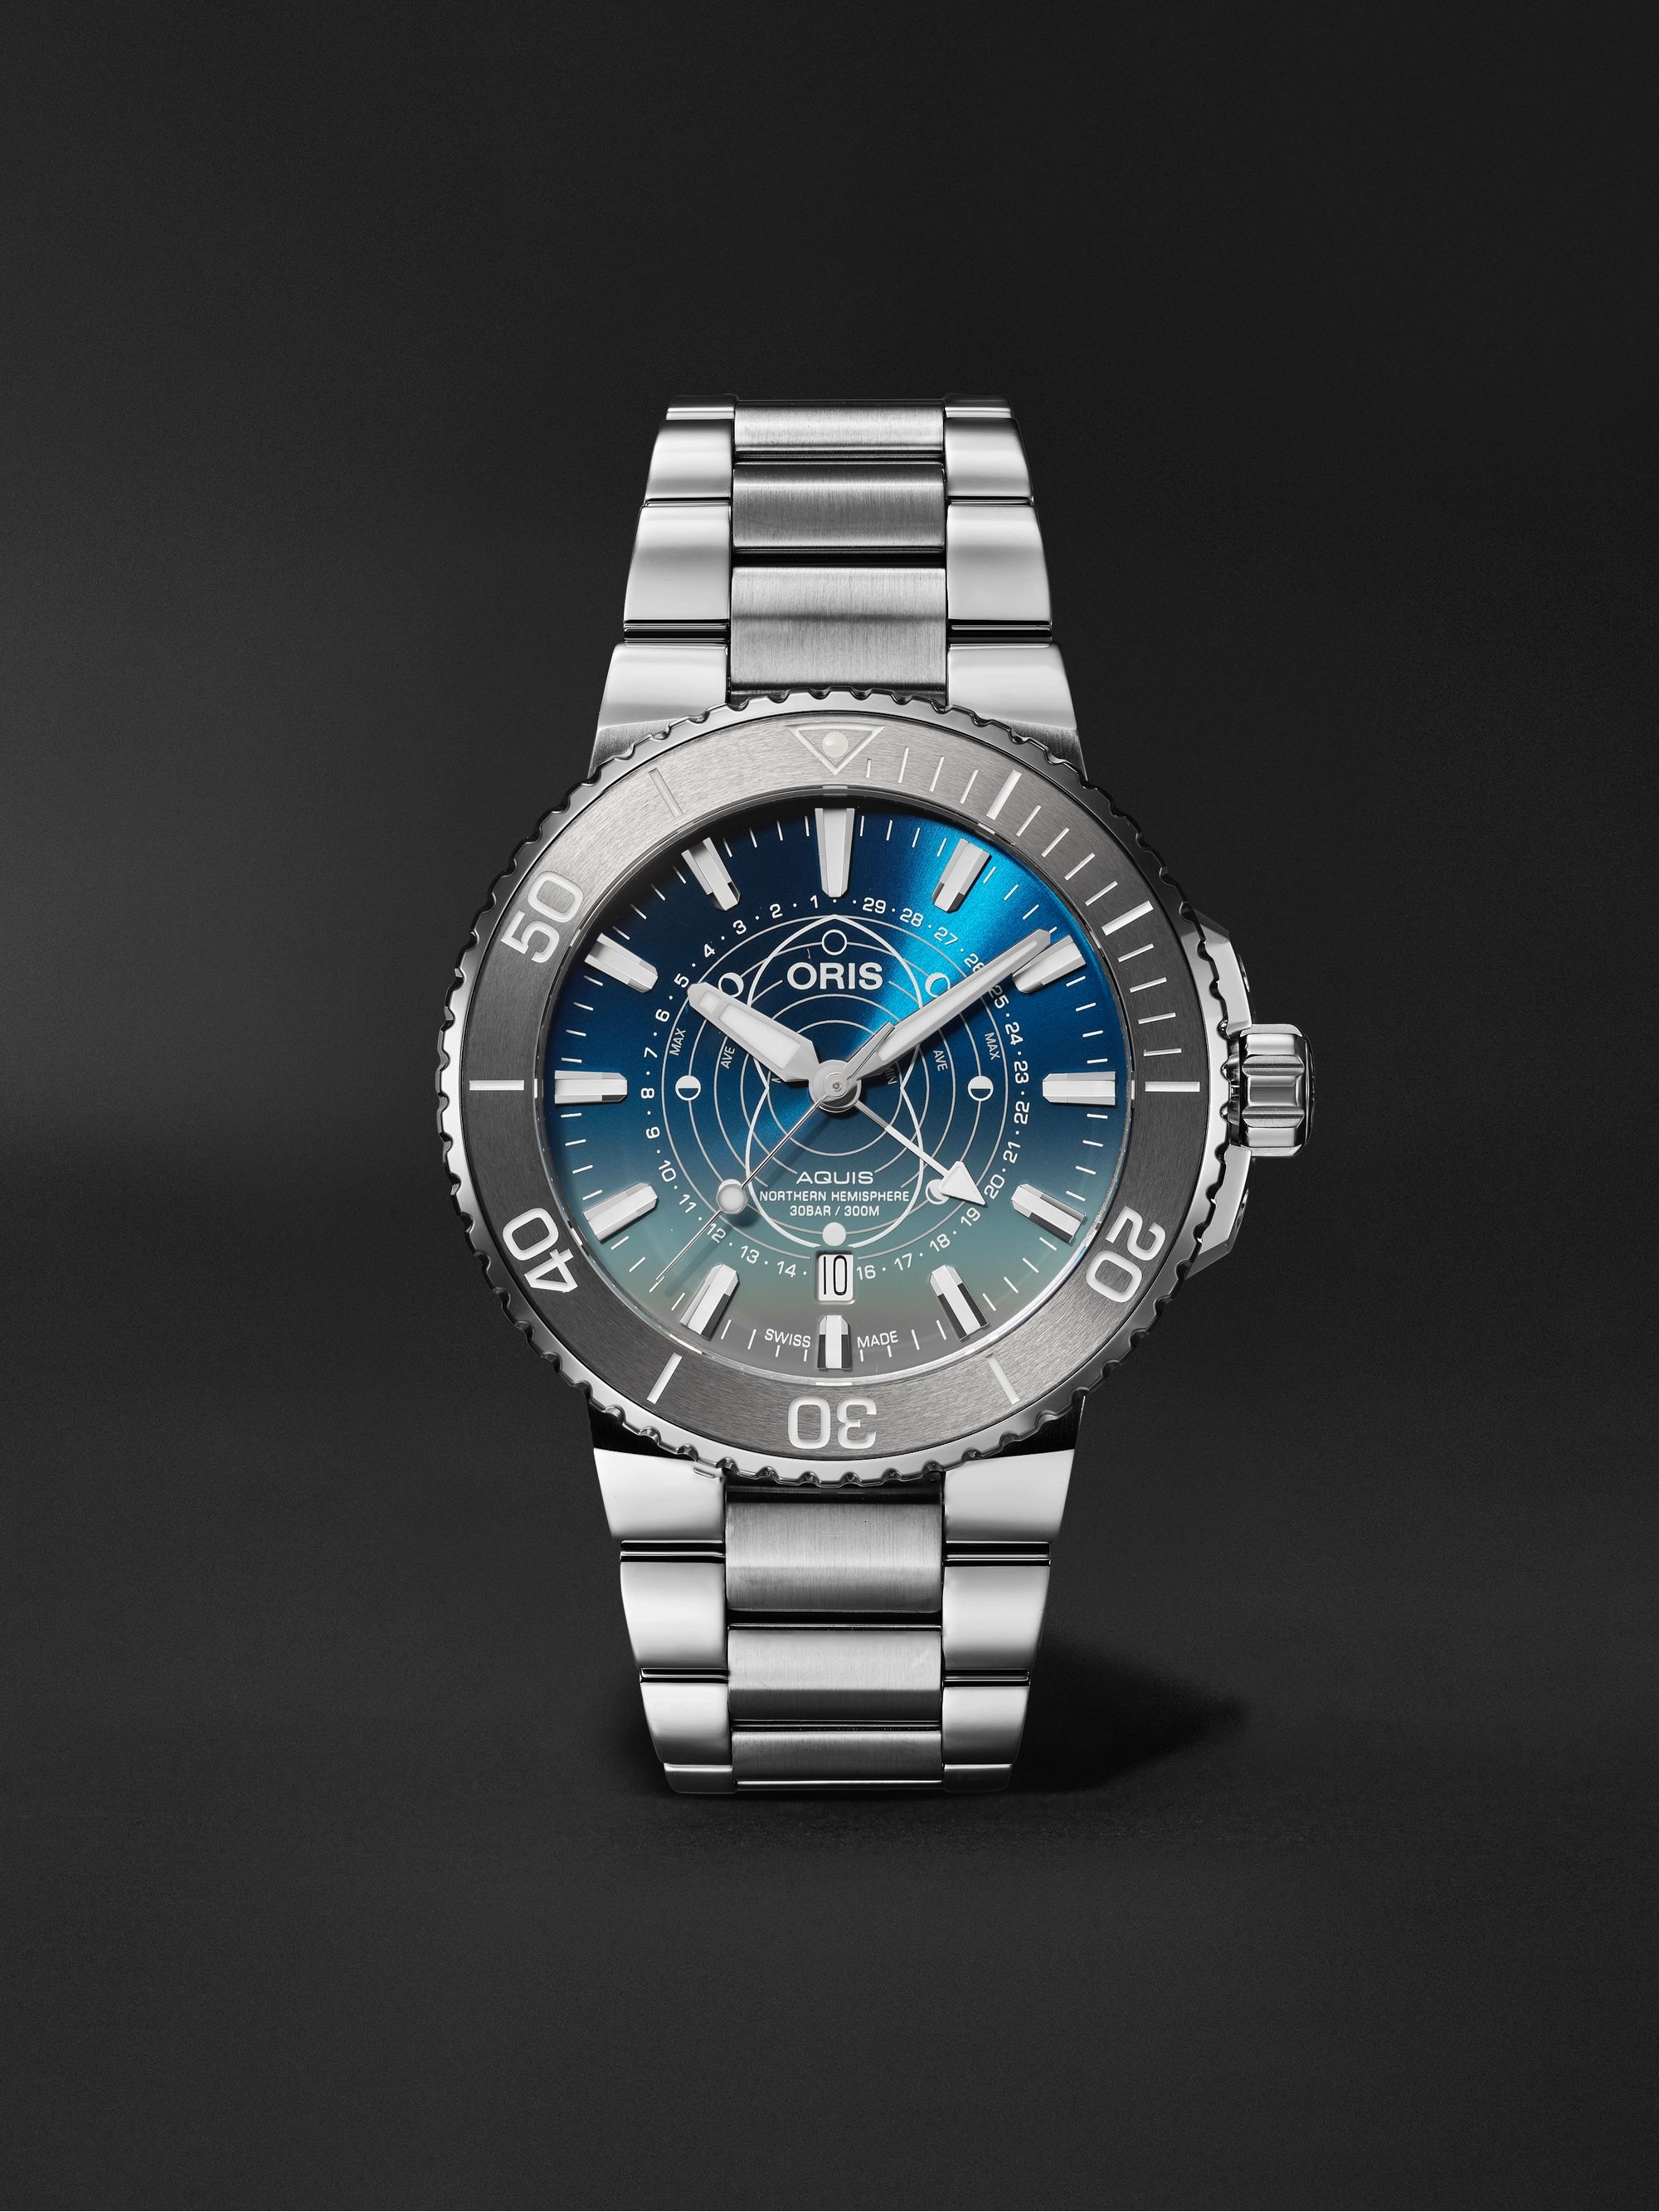 ORIS Aquis Dat Watt Limited Edition Automatic 43.5mm Stainless Steel Watch,  Ref. No. 01 761 7765 4185 | MR PORTER